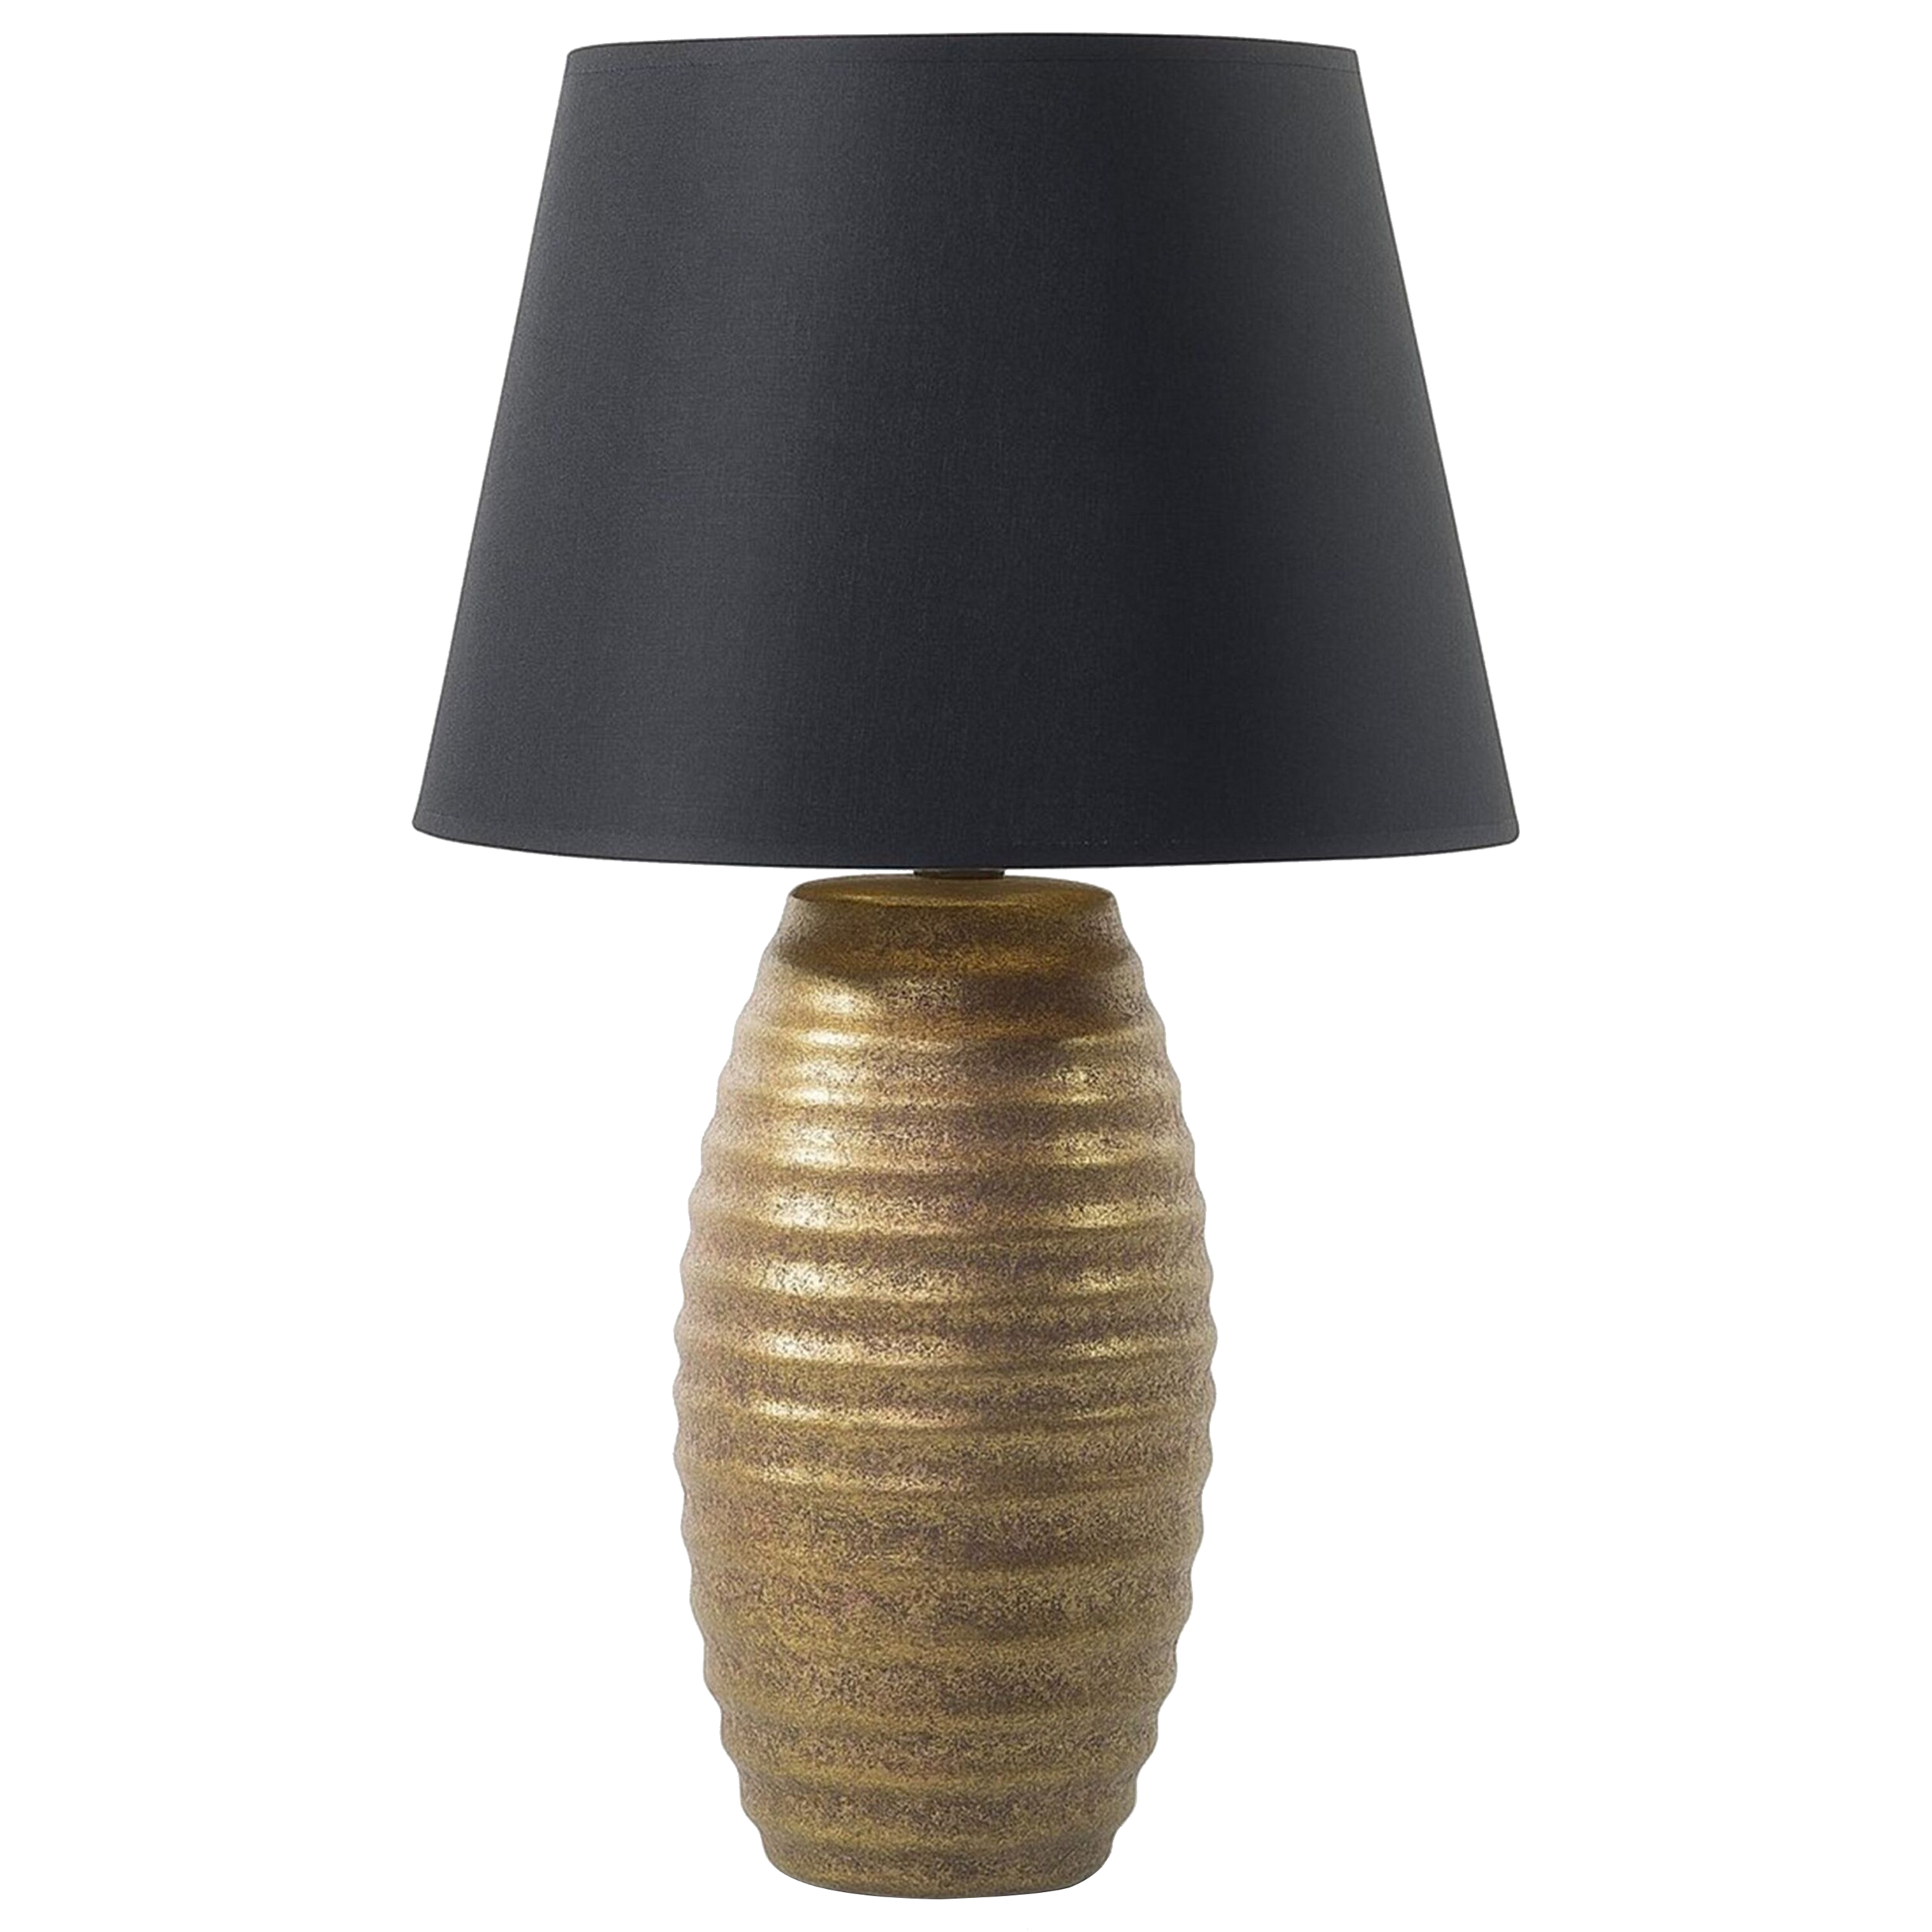 Beliani Table Lamp Gold Ceramic Base Black Fabric Cone Shade Bedside Table Lamp